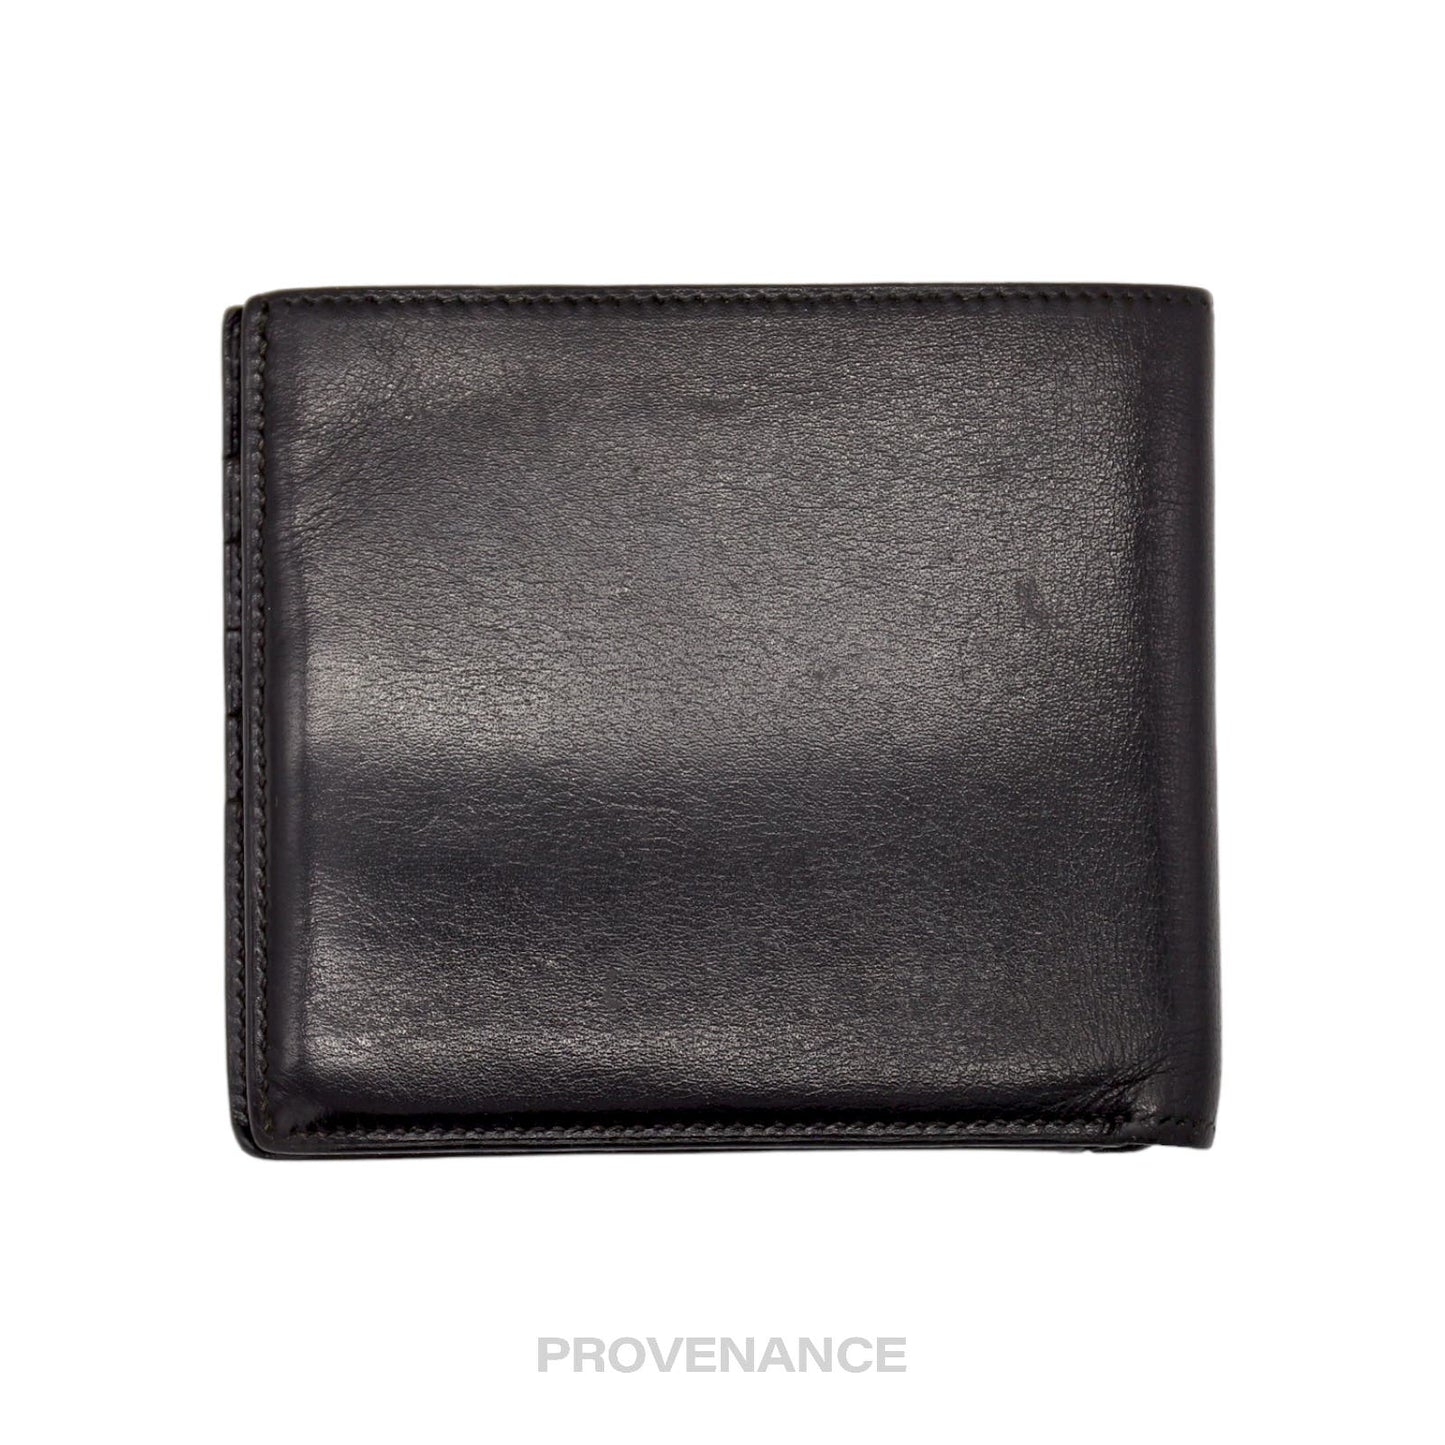 🔴 Hermès 10CC Compact Wallet - Black Noir Box Calfskin